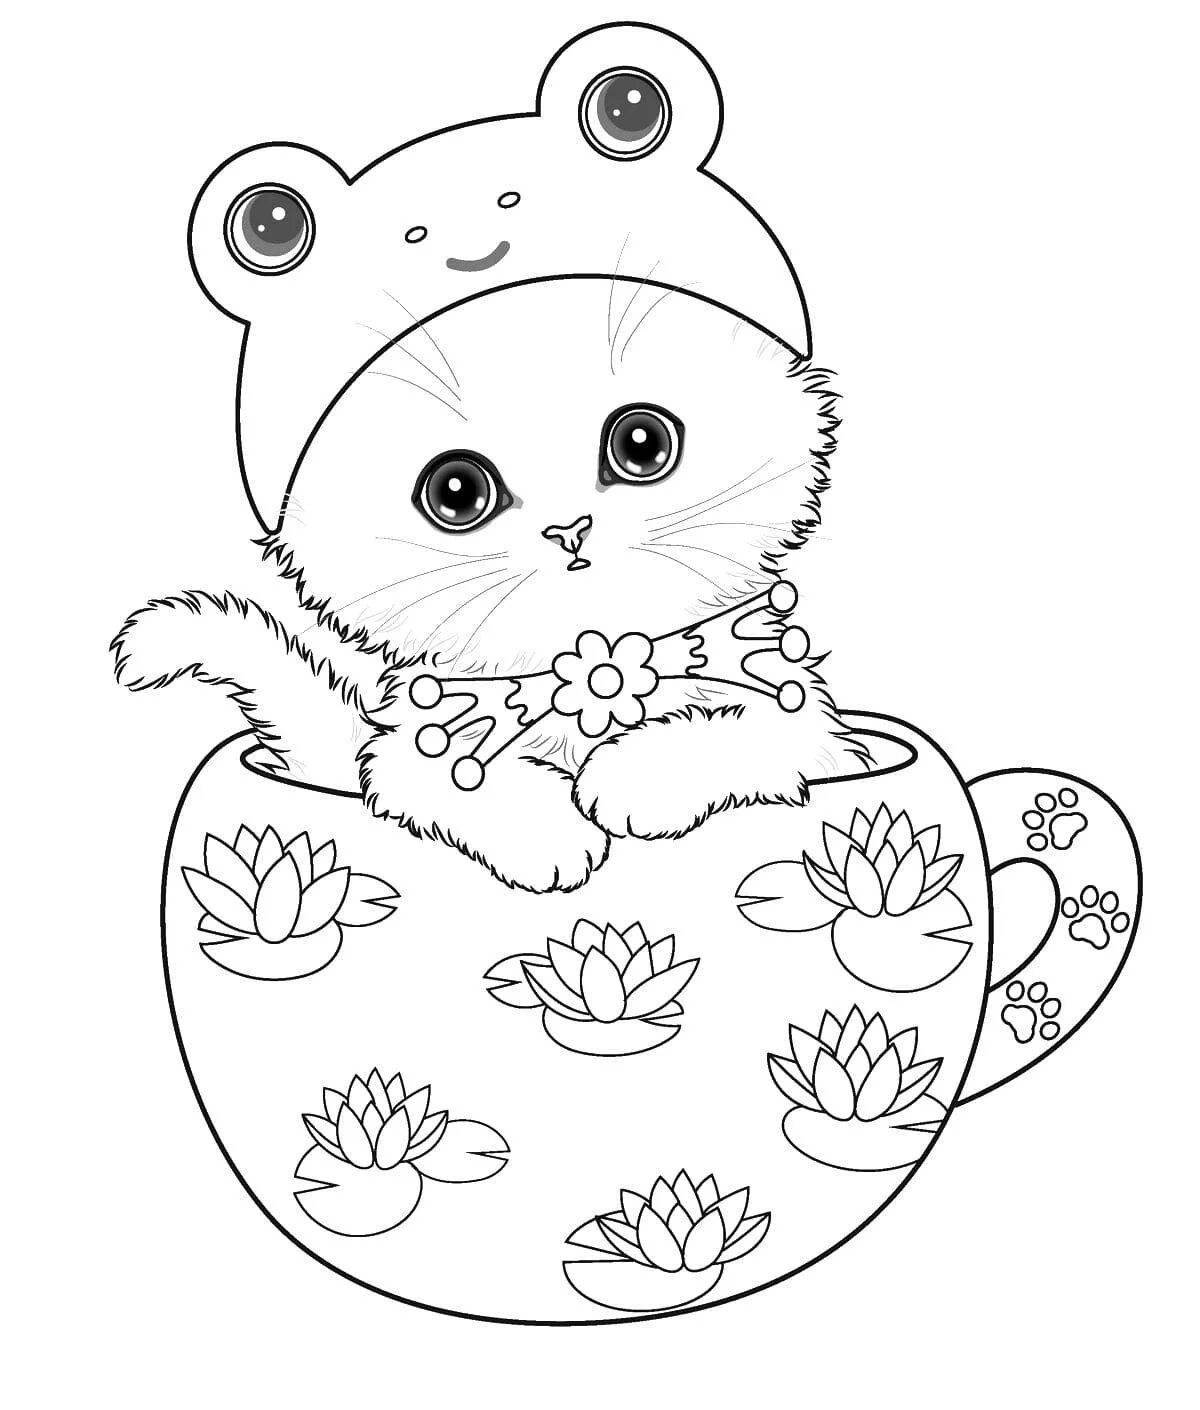 Cute and precious cat coloring book